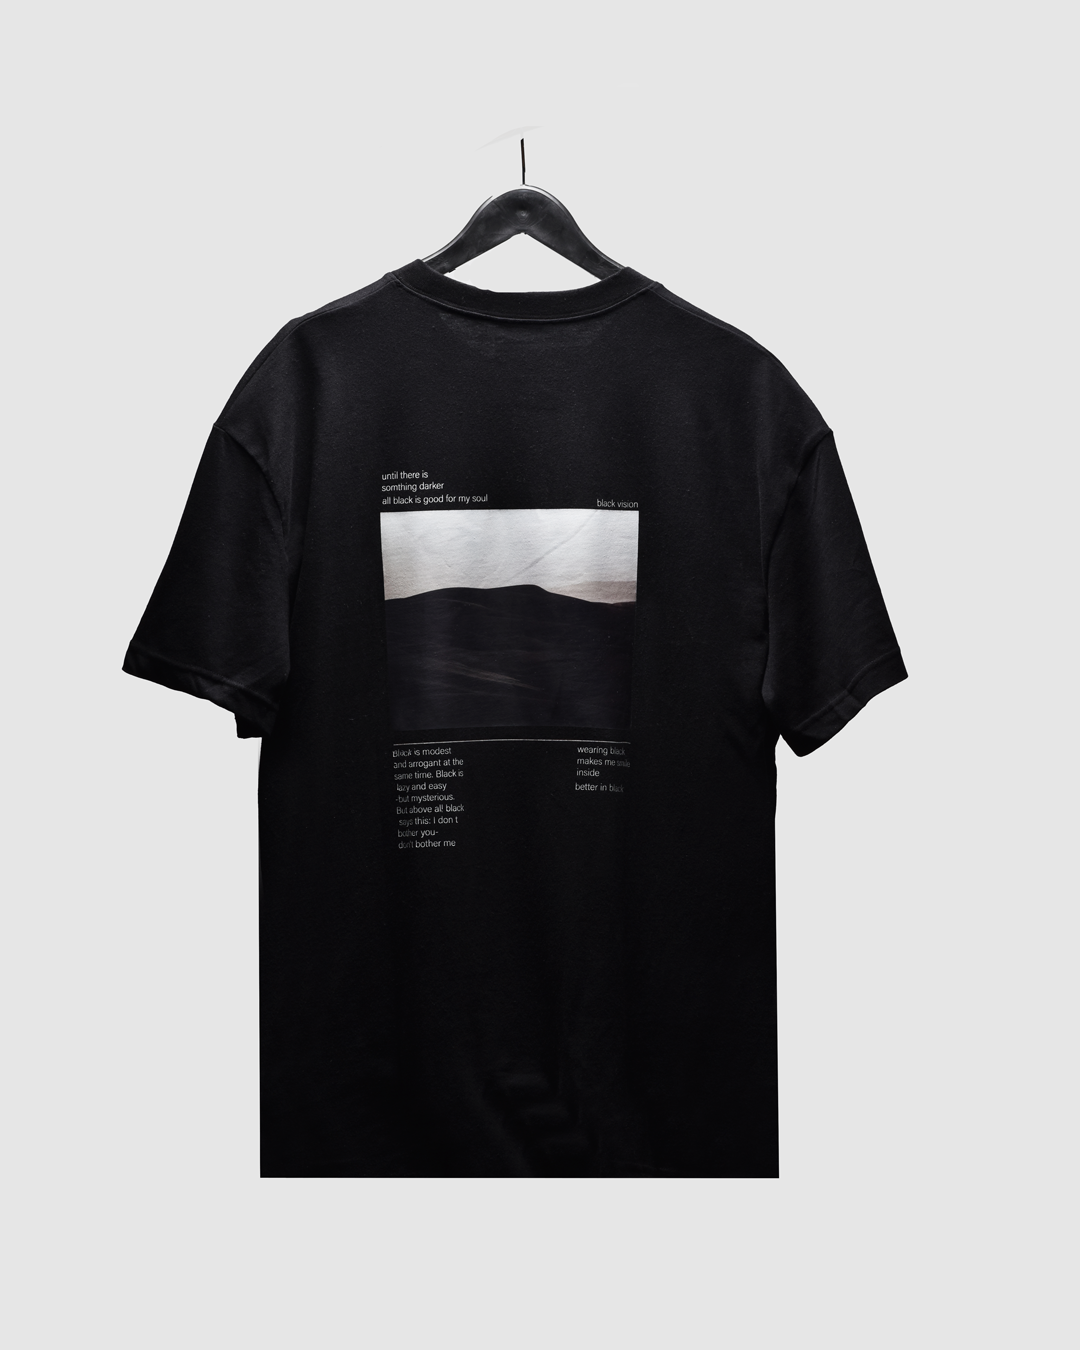 Black Sand T-shirt - blvckvision